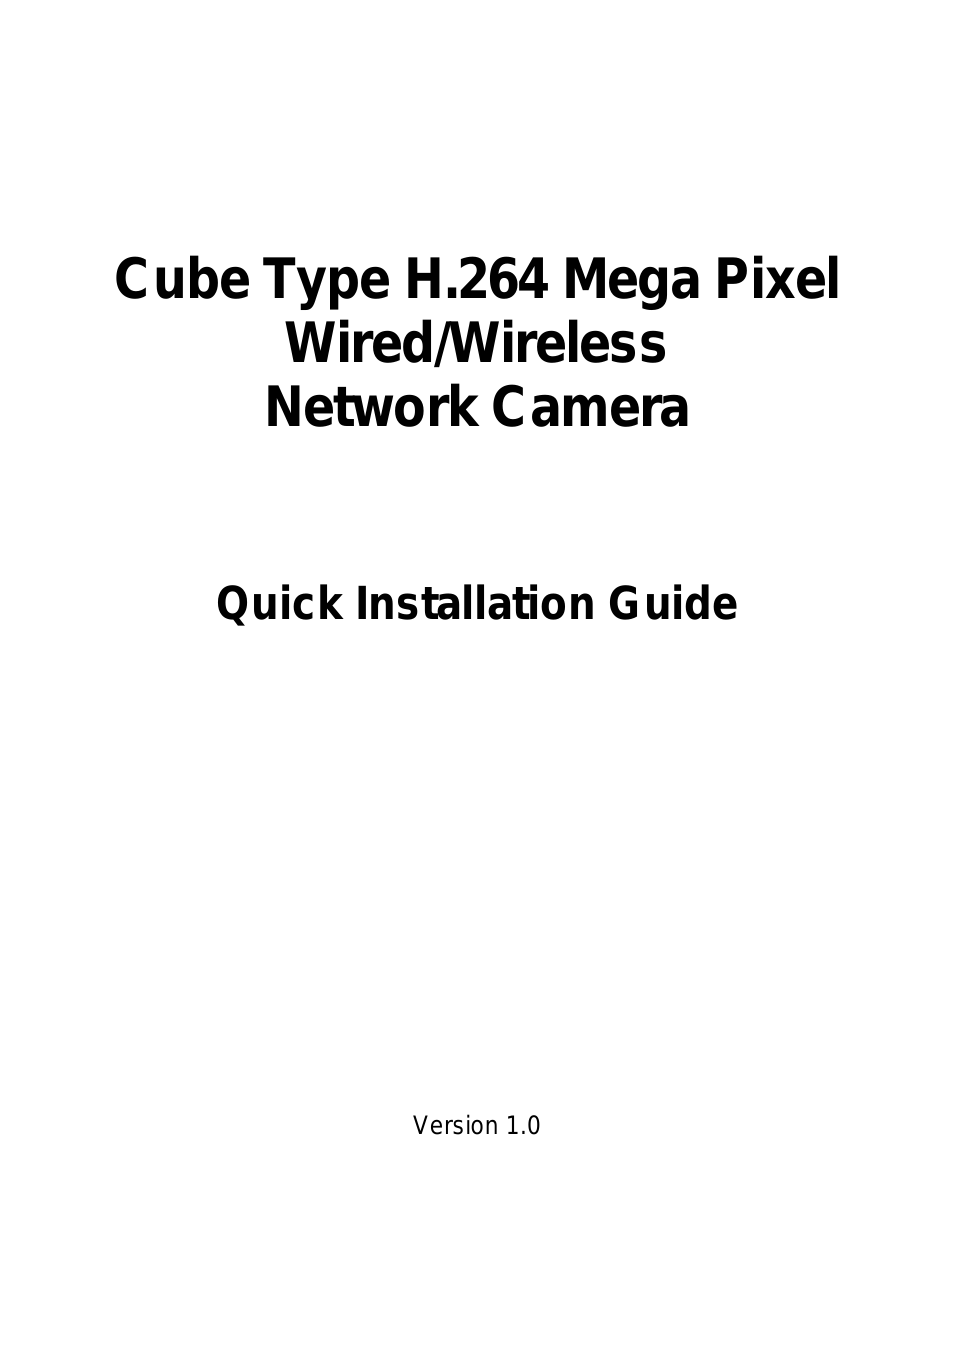 ICS2300 Quick Installation Guide